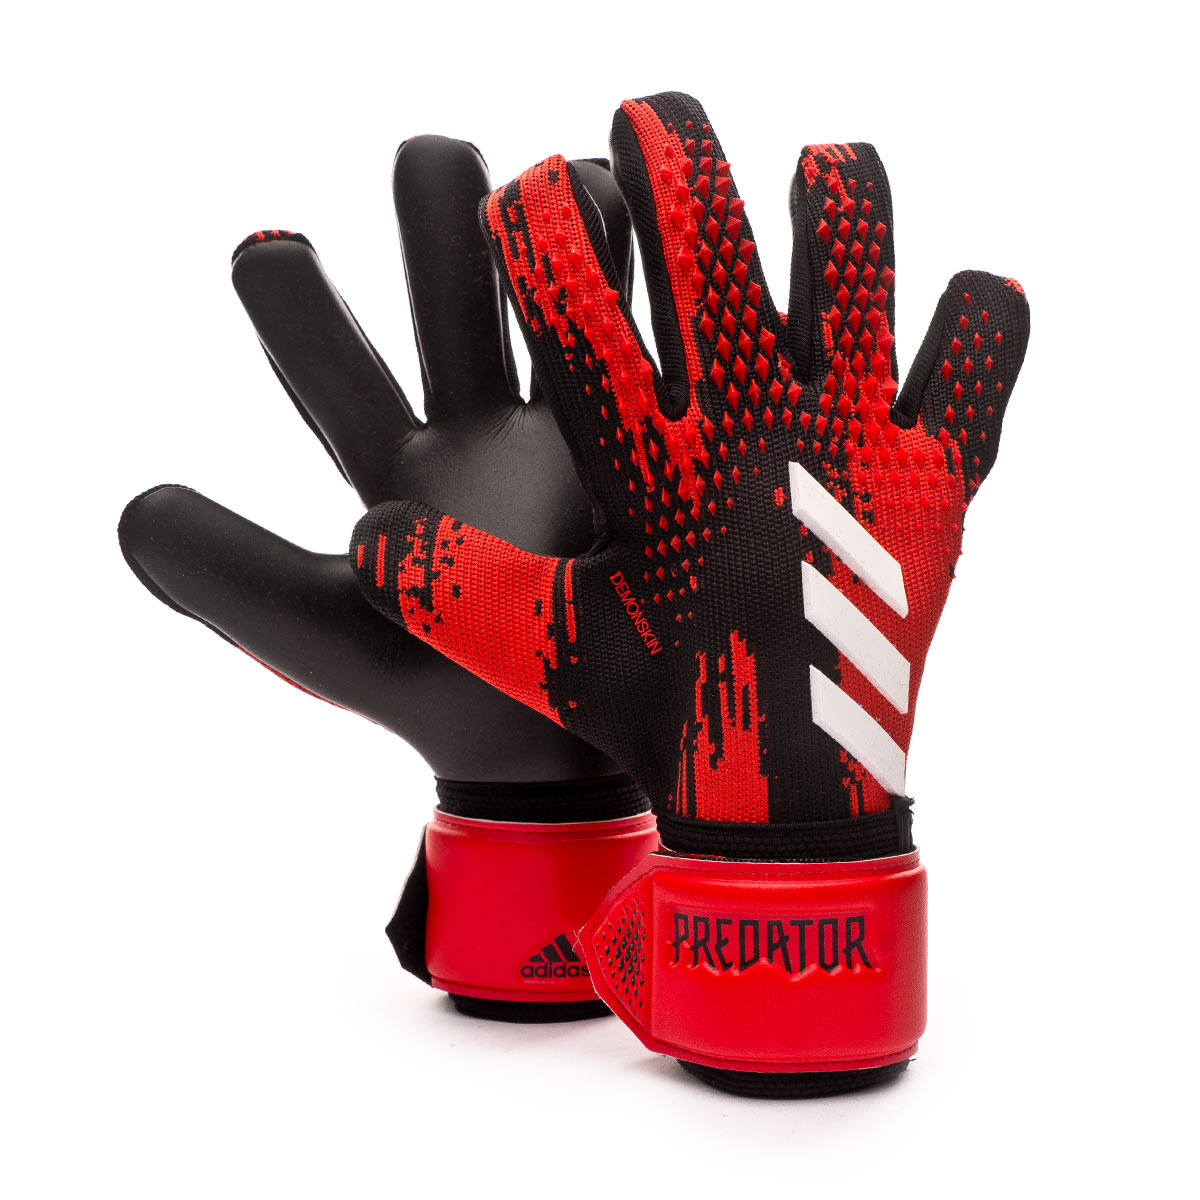 adidas predator league goalkeeper gloves